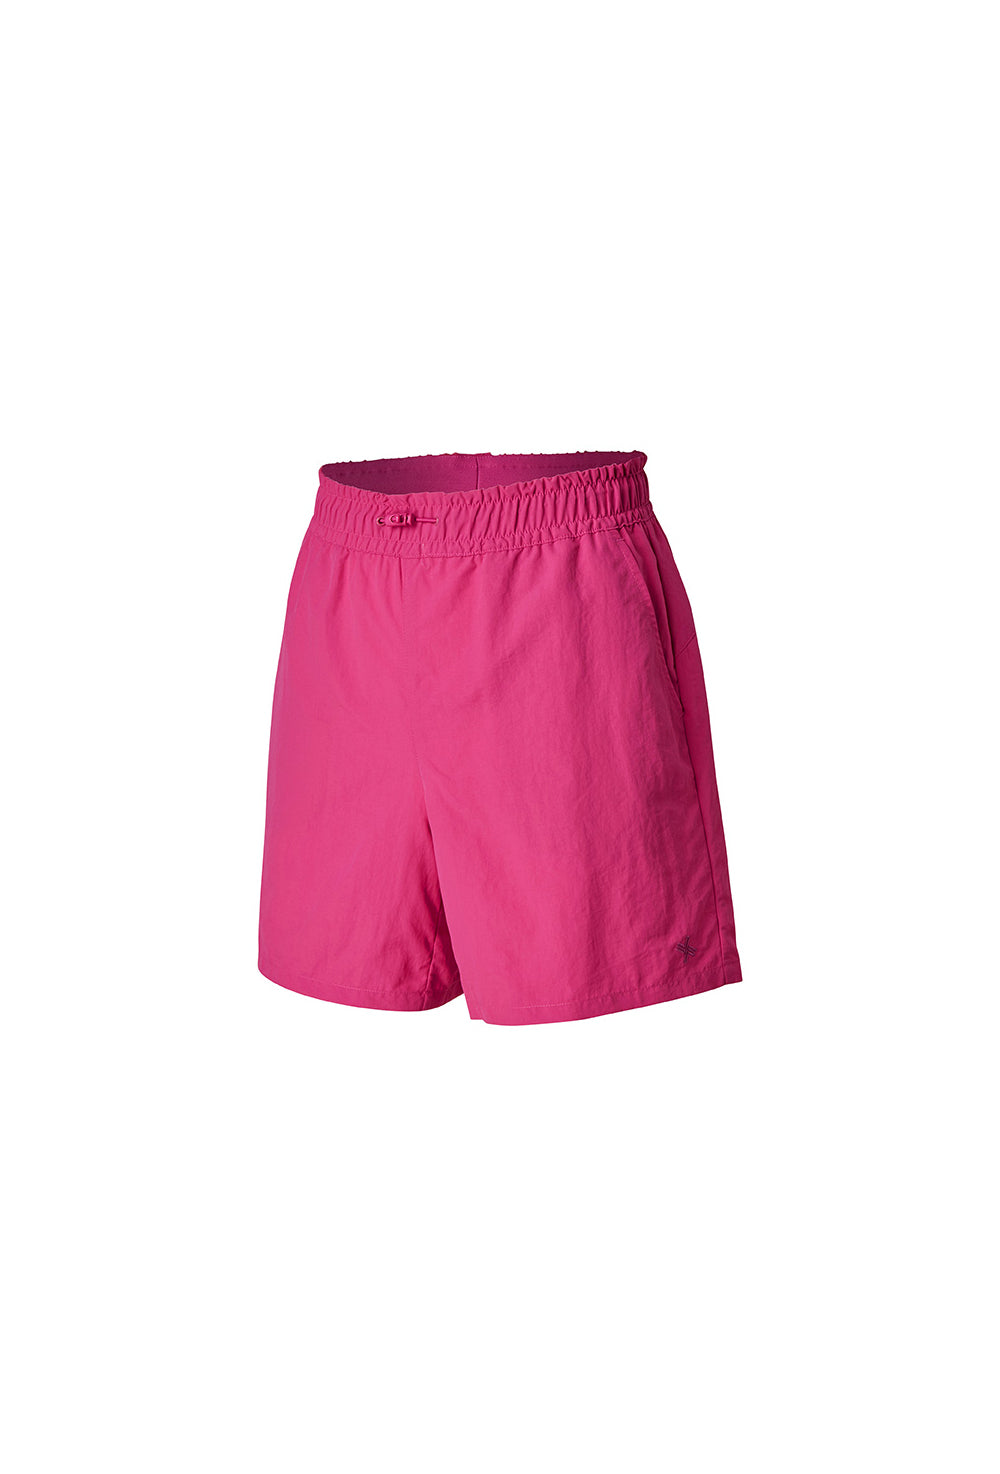 Basic Woven Half Shorts - Rasberry Sherbet (Clearance)